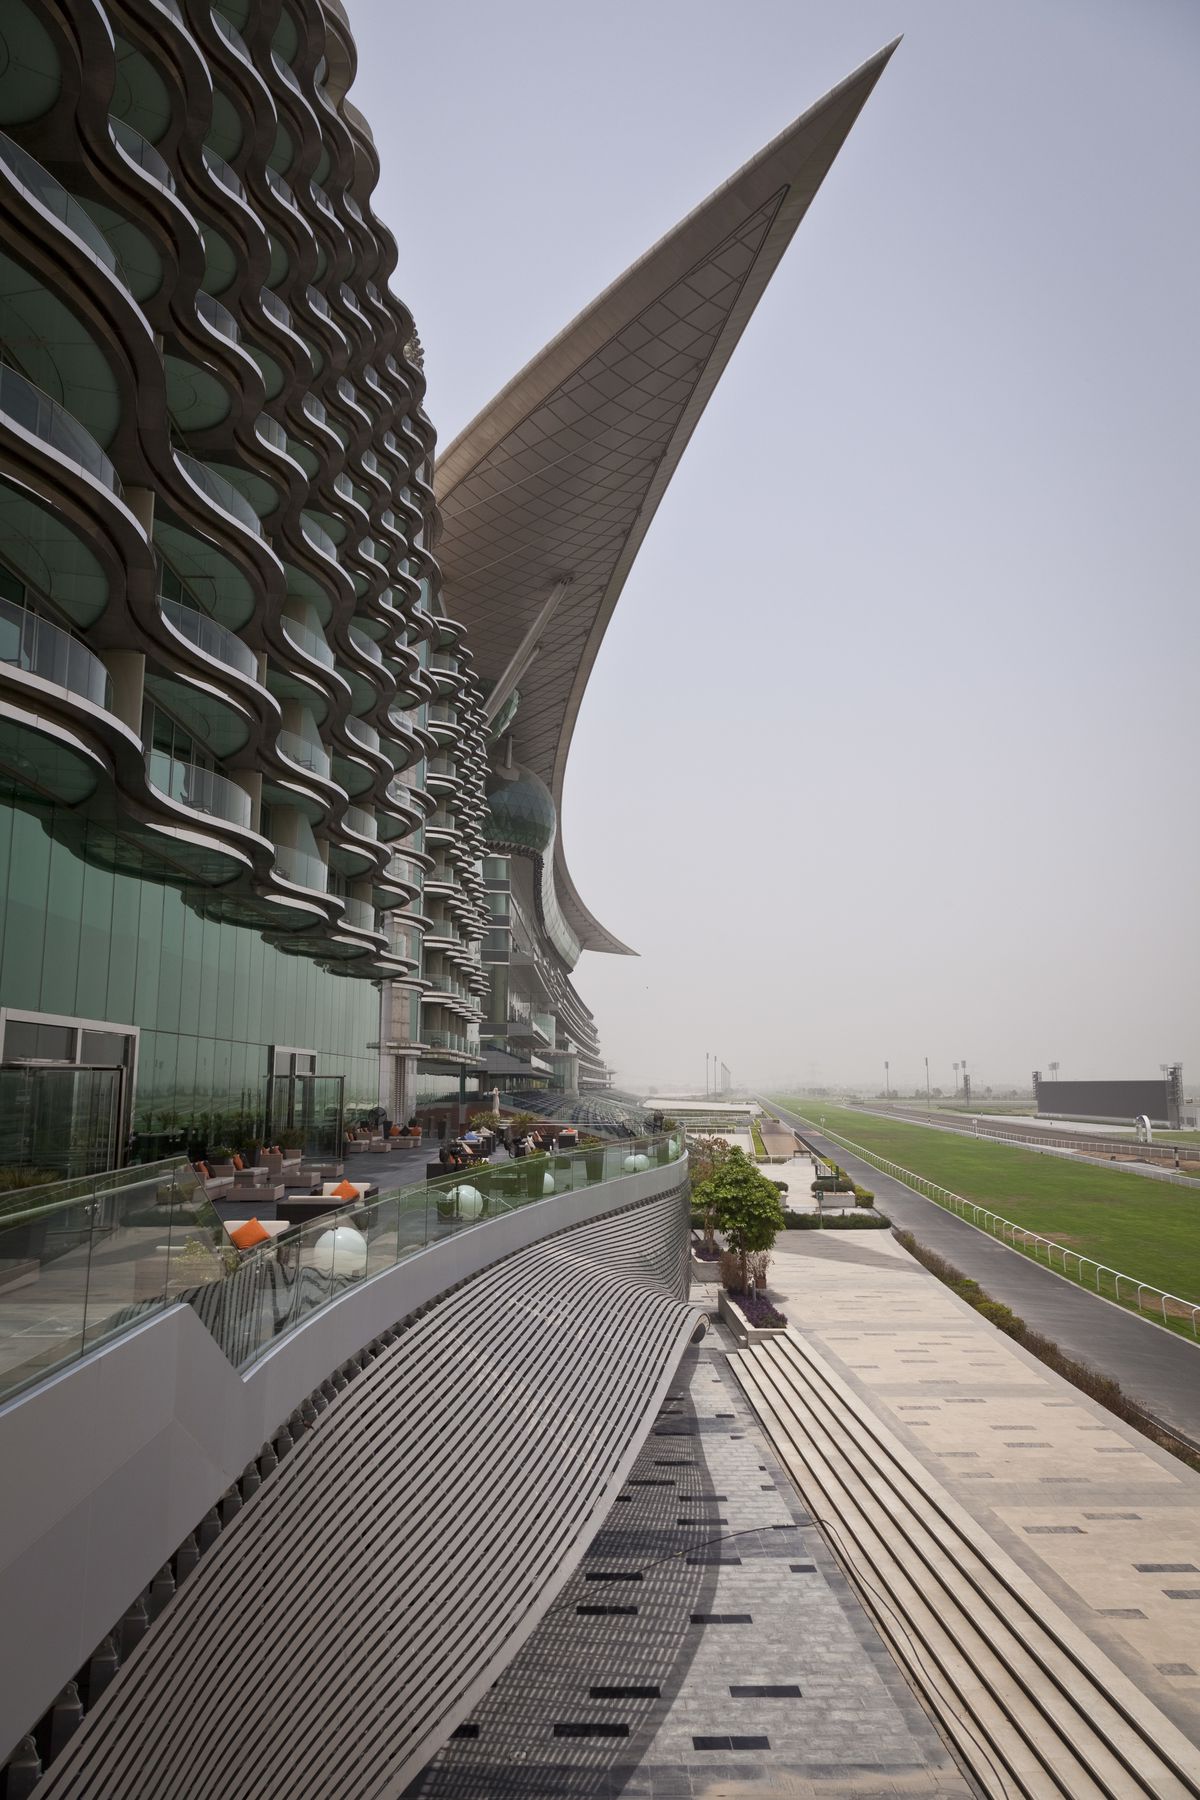 UAE - Dubai - The Meydan Hotel and Race track